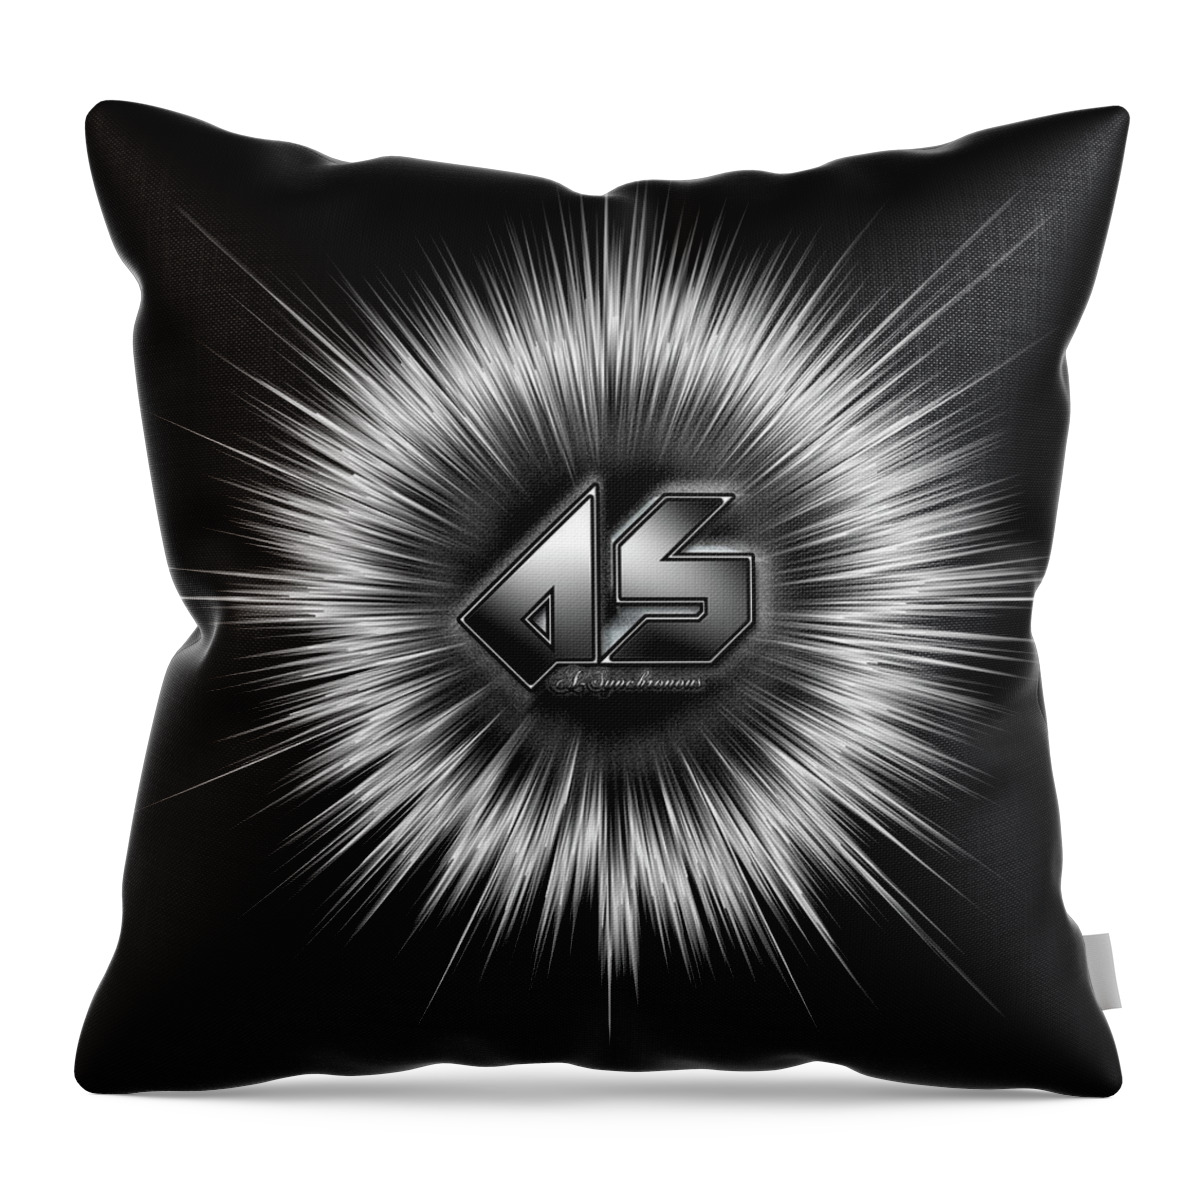 A-synchronous Throw Pillow featuring the digital art A-Synchronous Star Flare by Rolando Burbon